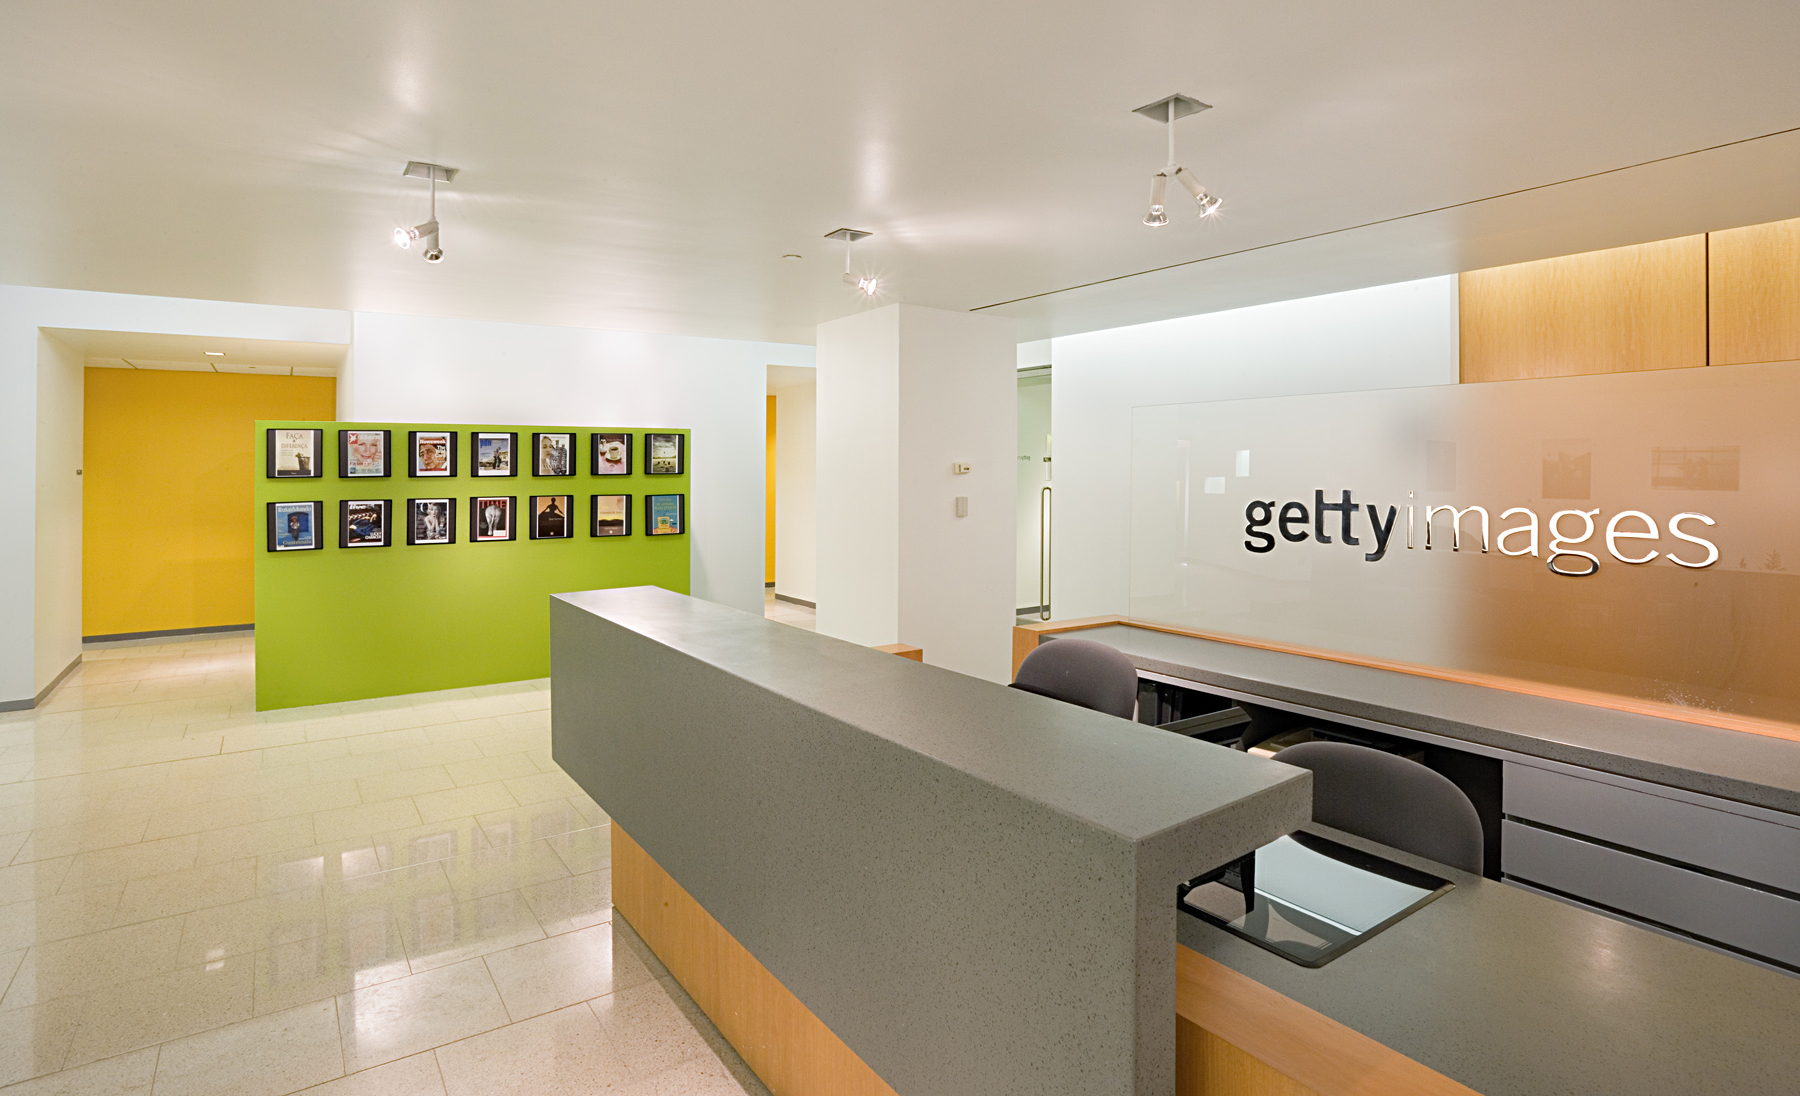 Tobin Parnes Design. NYC. Workplace Design. Reception Desk Design. Getty Images Offices